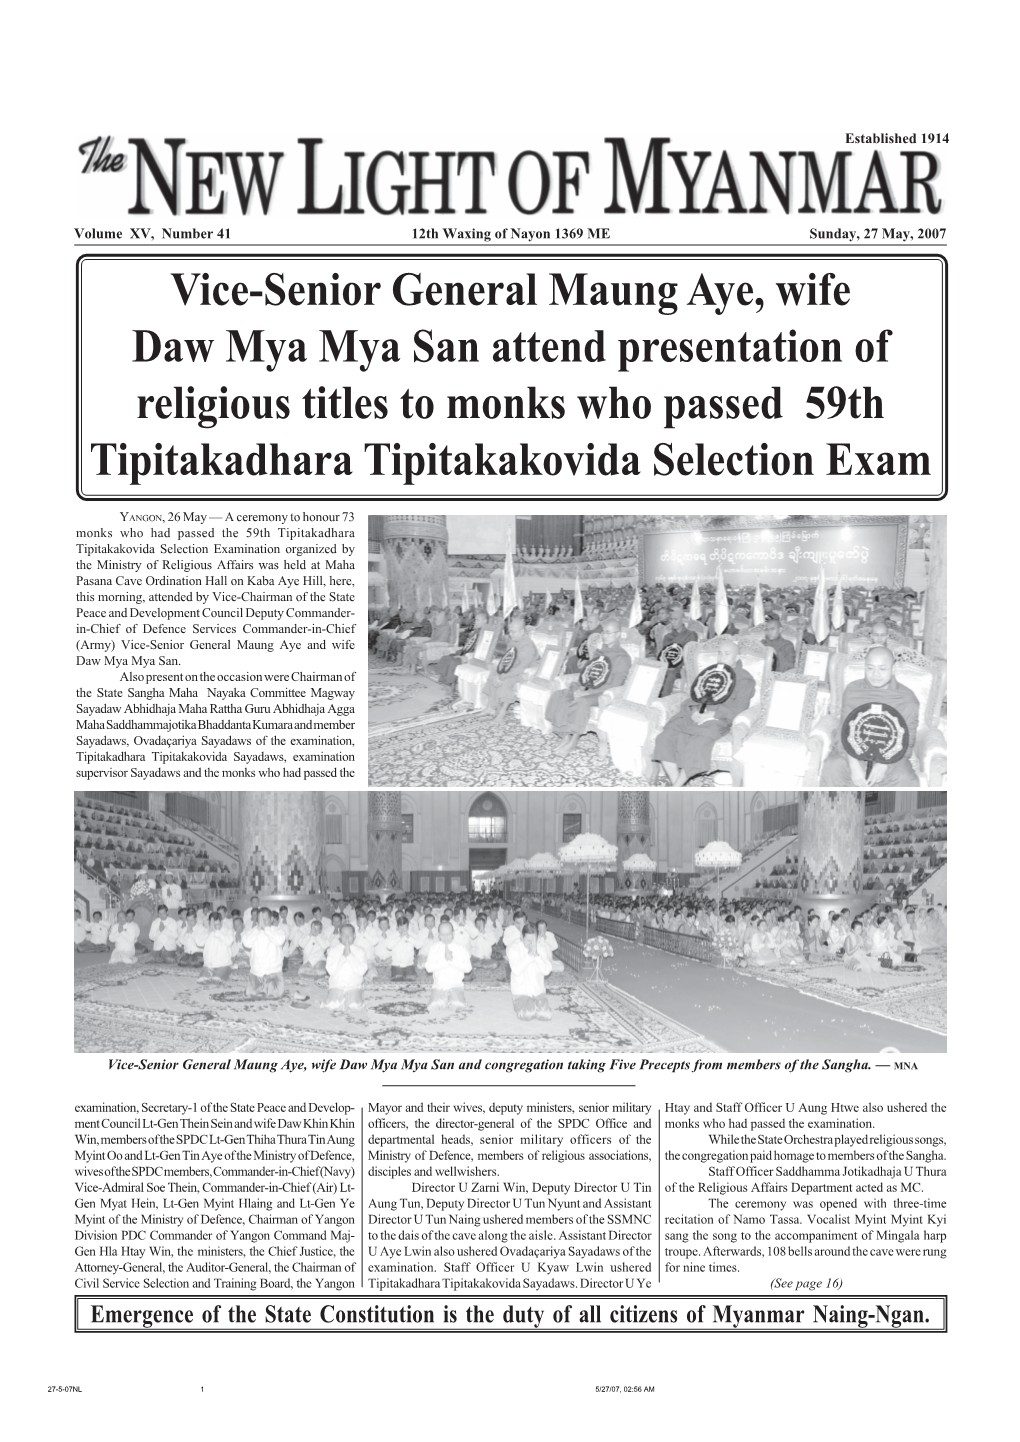 Vice-Senior General Maung Aye, Wife Daw Mya Mya San Attend Presentation of Religious Titles to Monks Who Passed 59Th Tipitakadhara Tipitakakovida Selection Exam